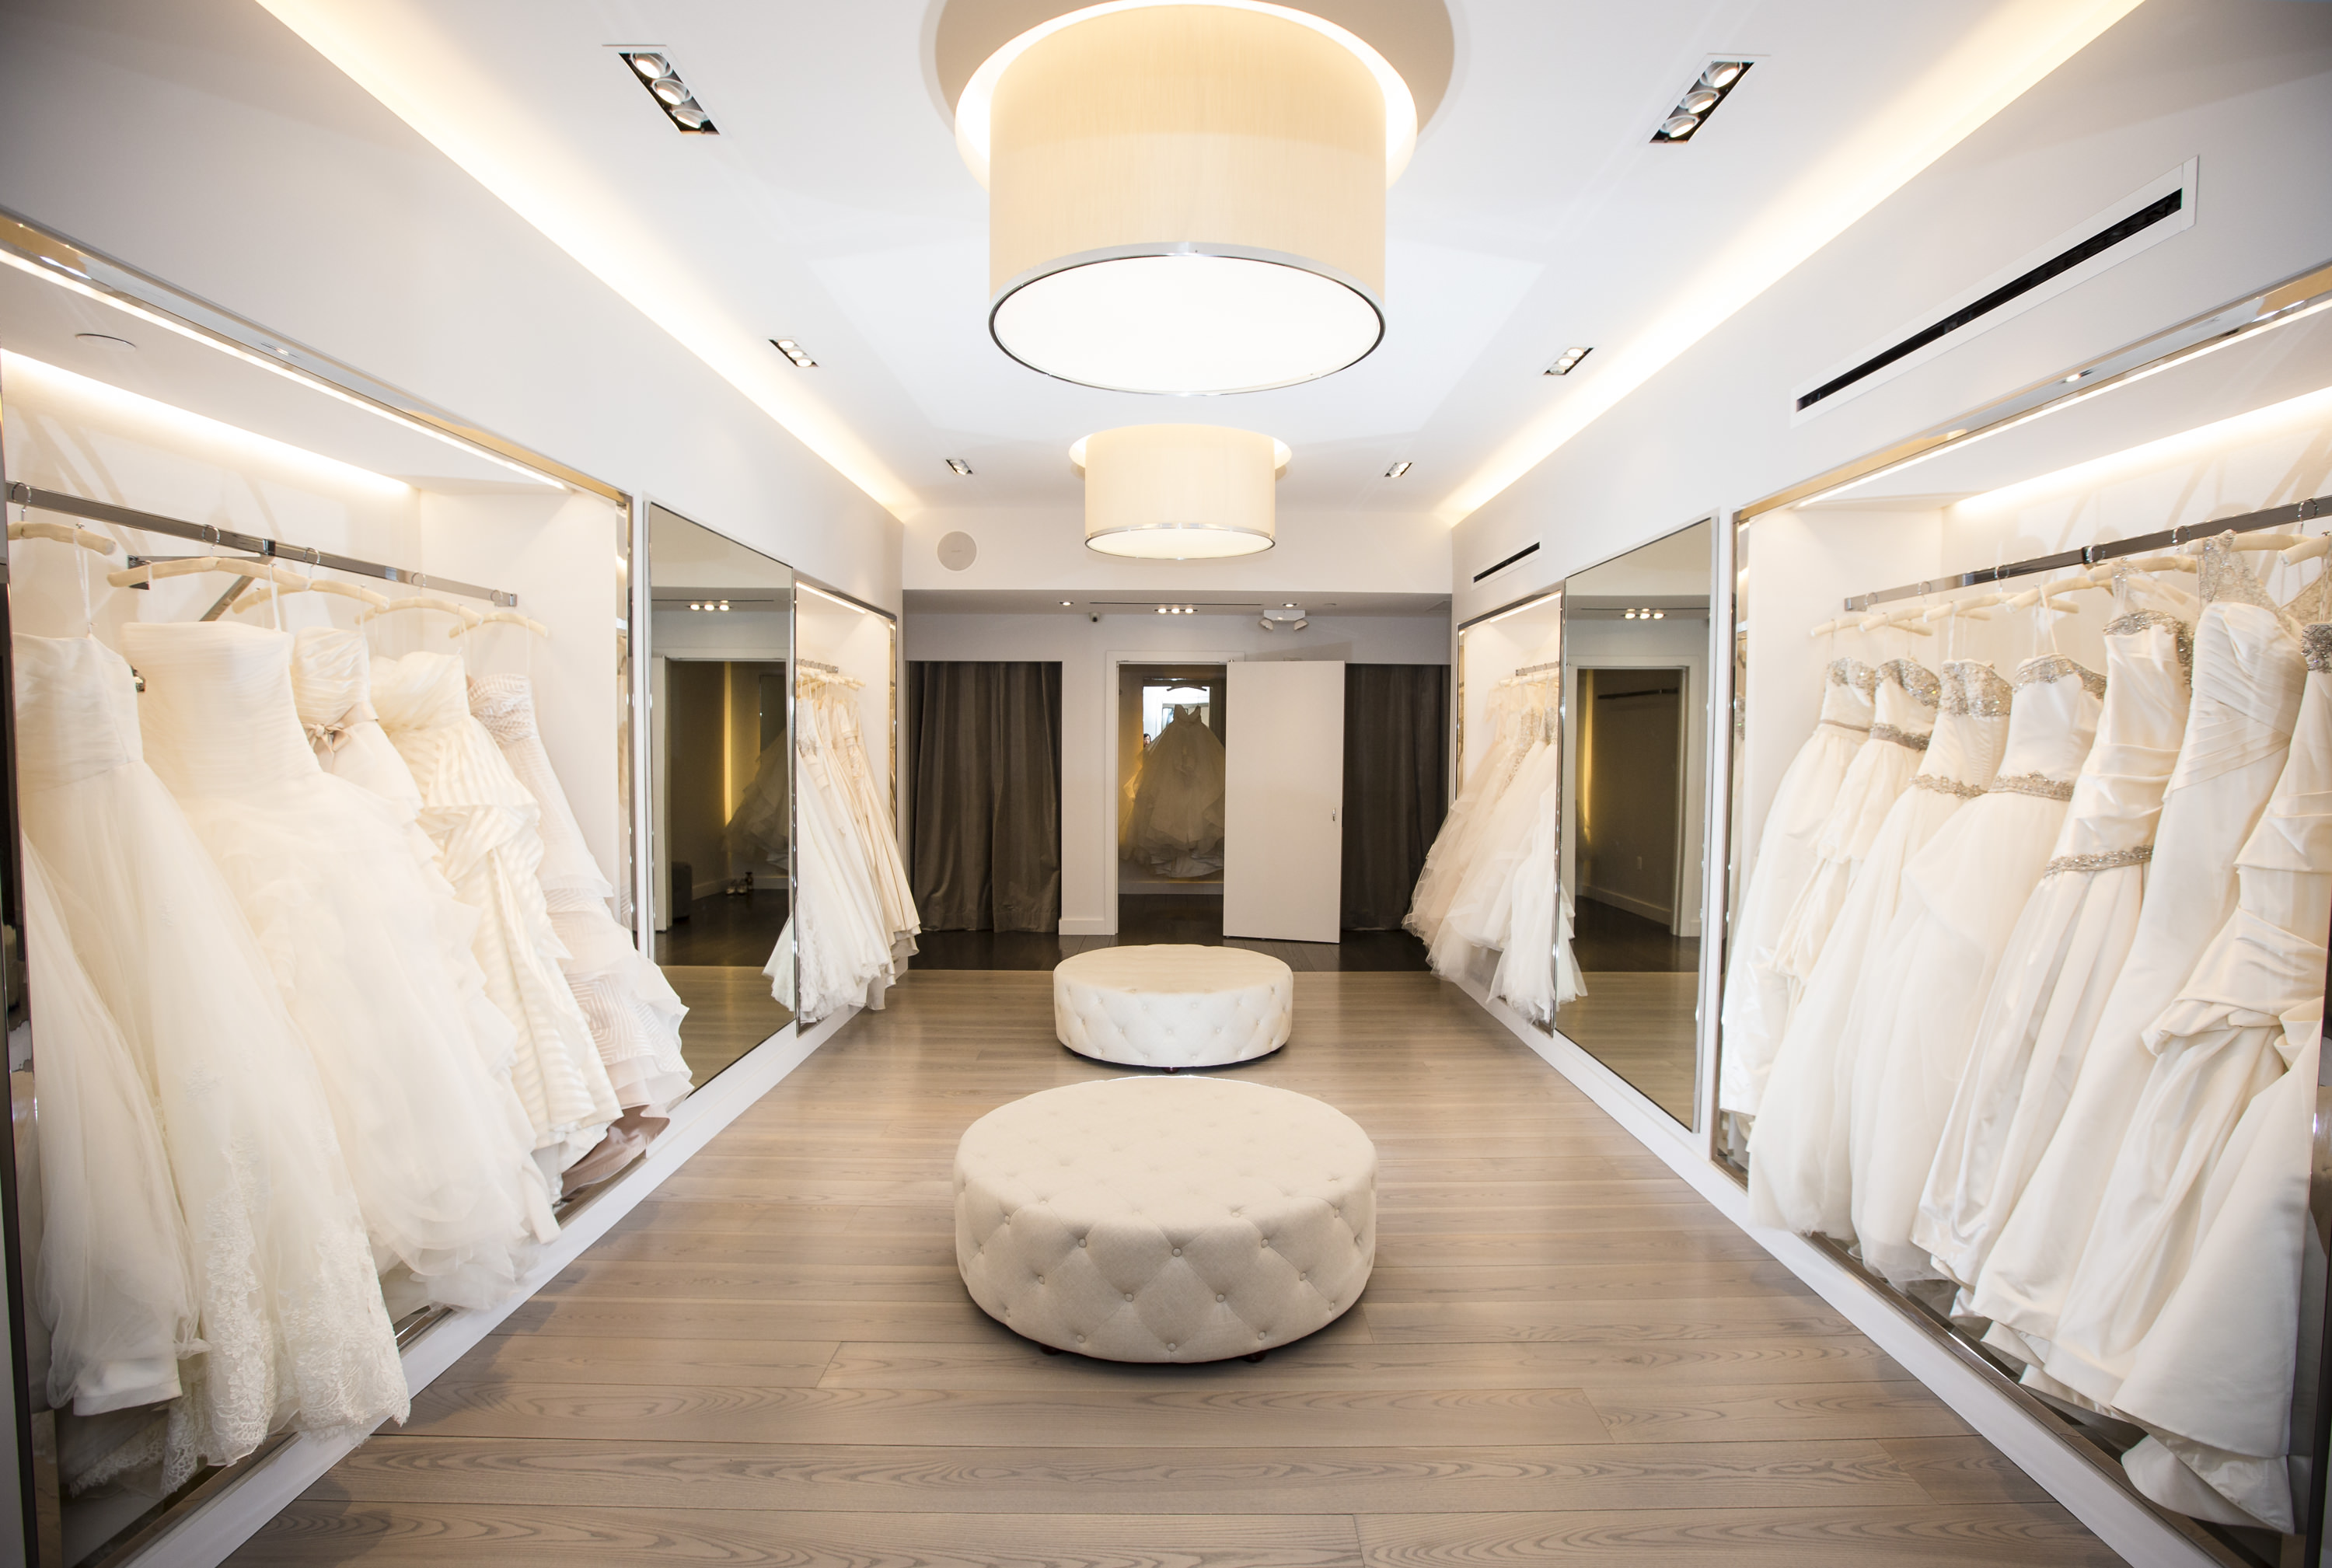 designer-wedding-dresses